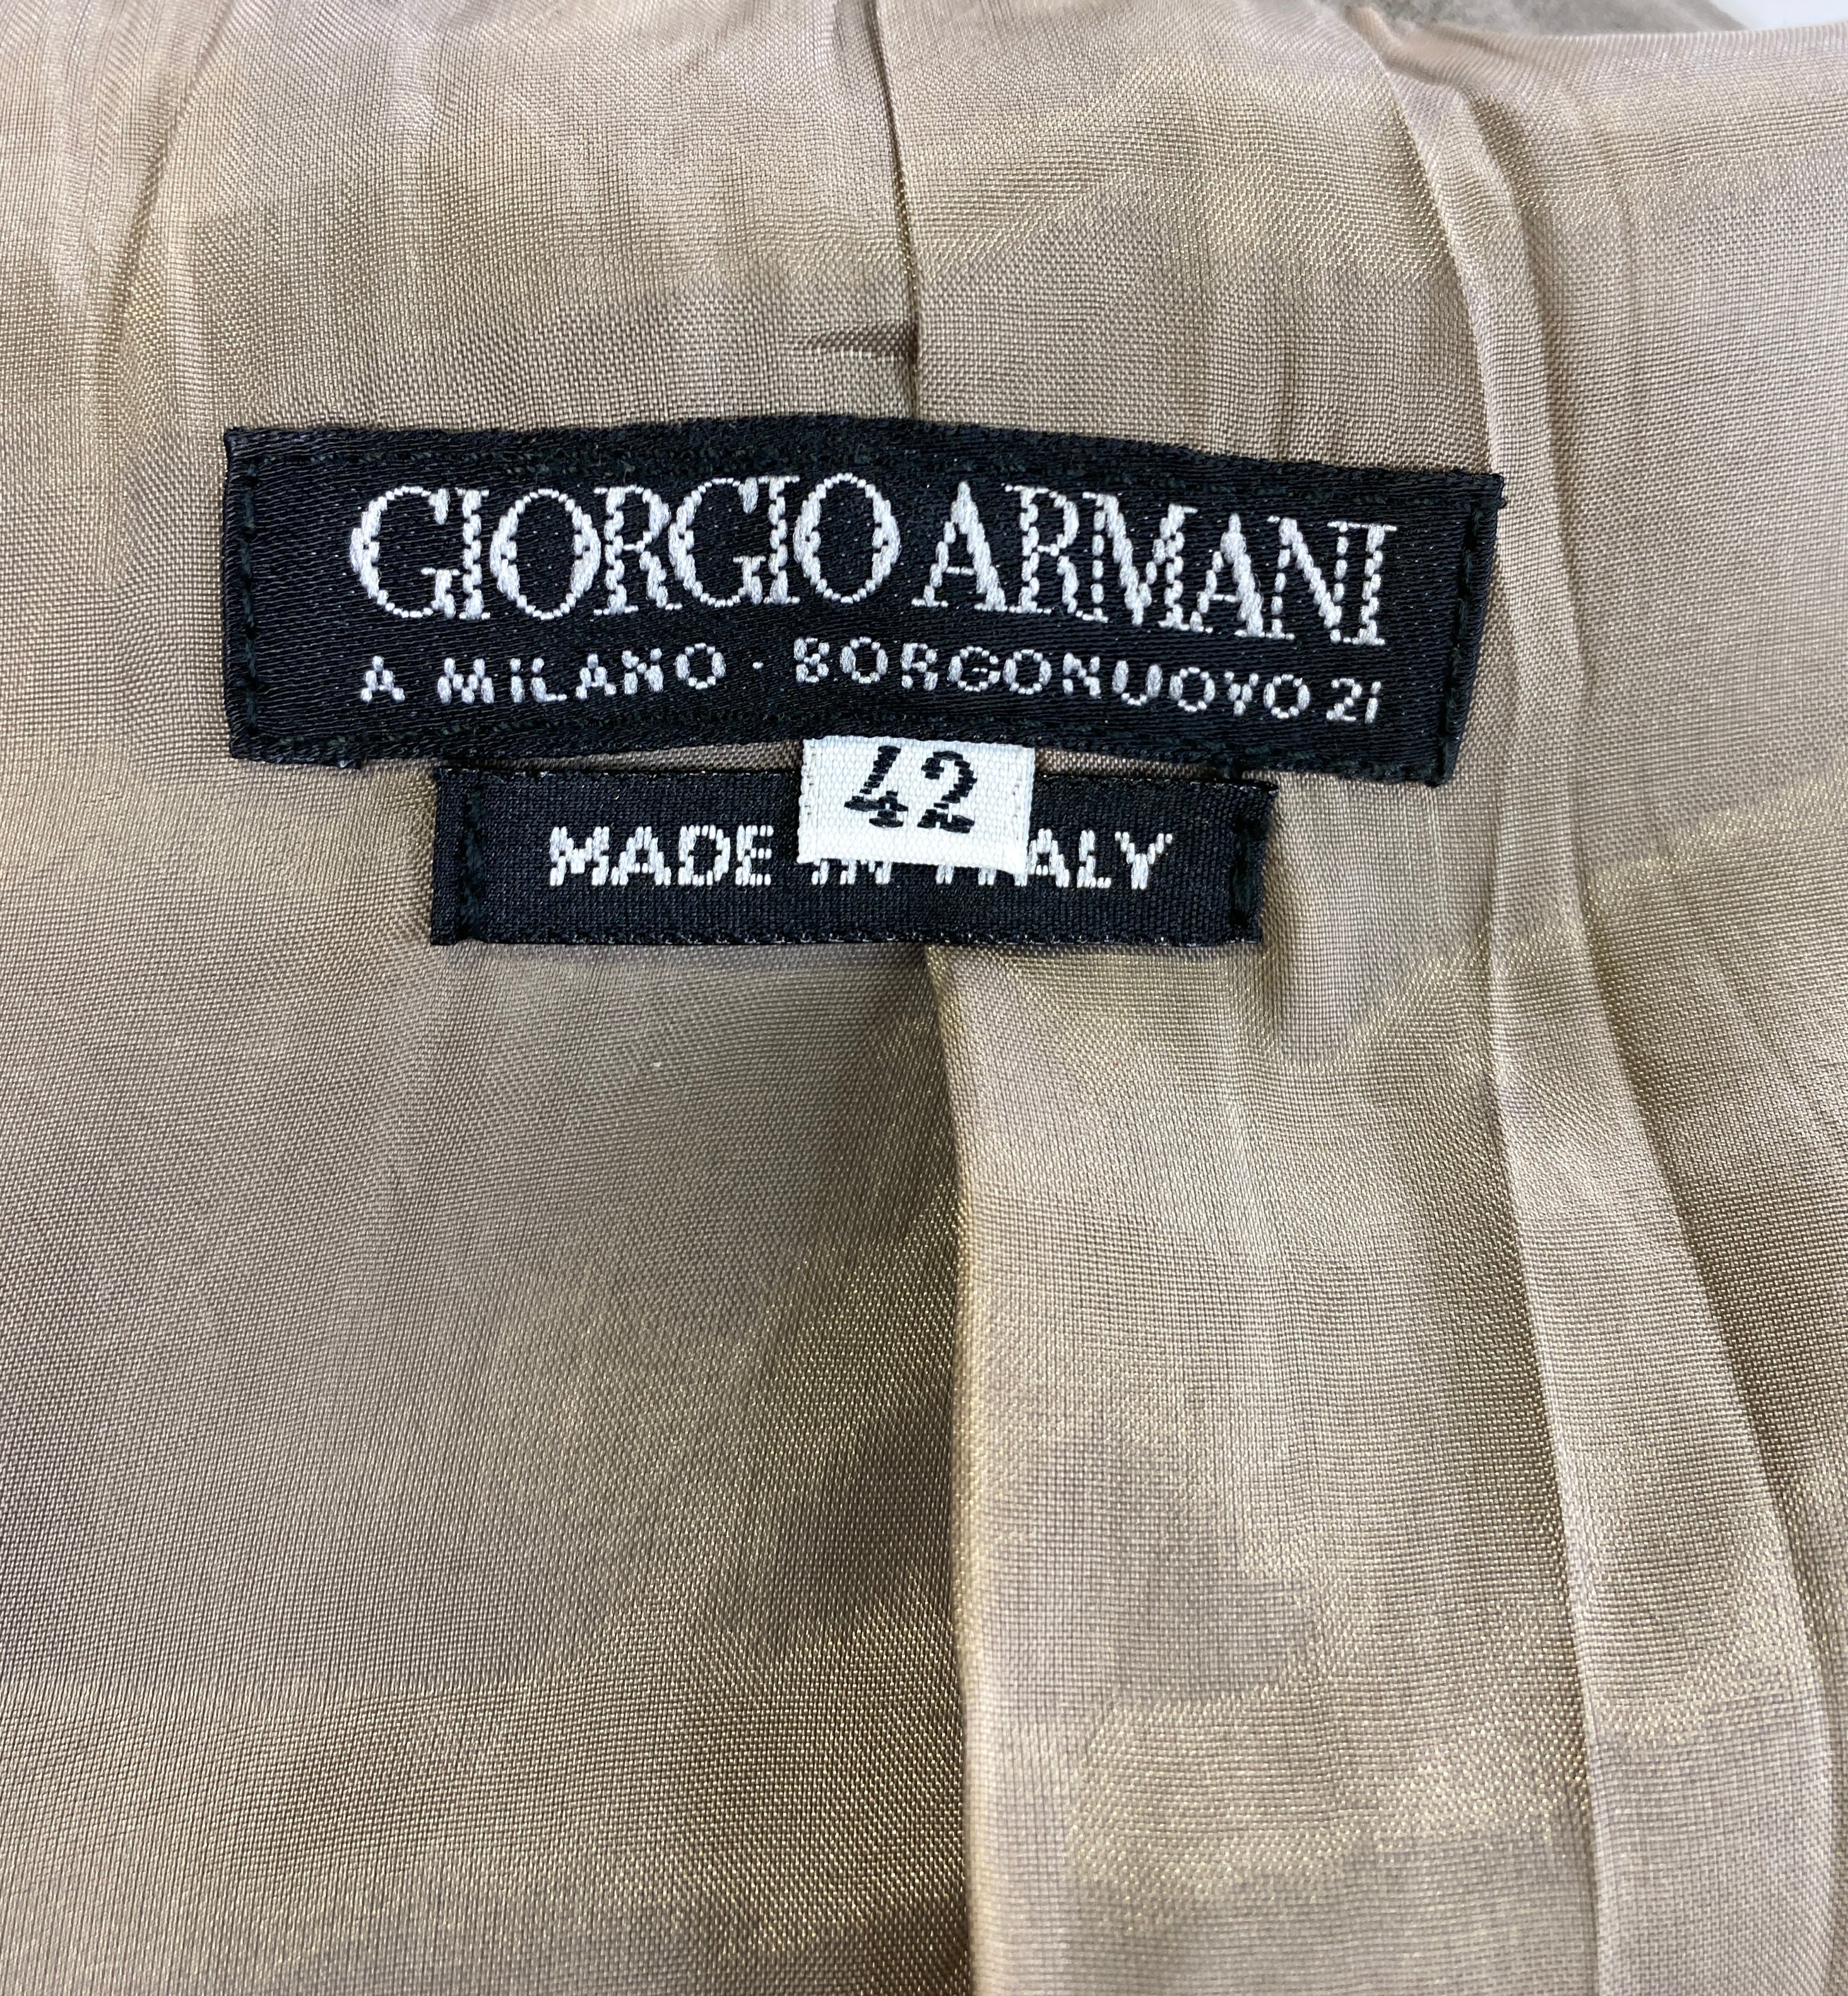 Vintage 90s Green Wool Giorgio Armani Skirt Suit, Small